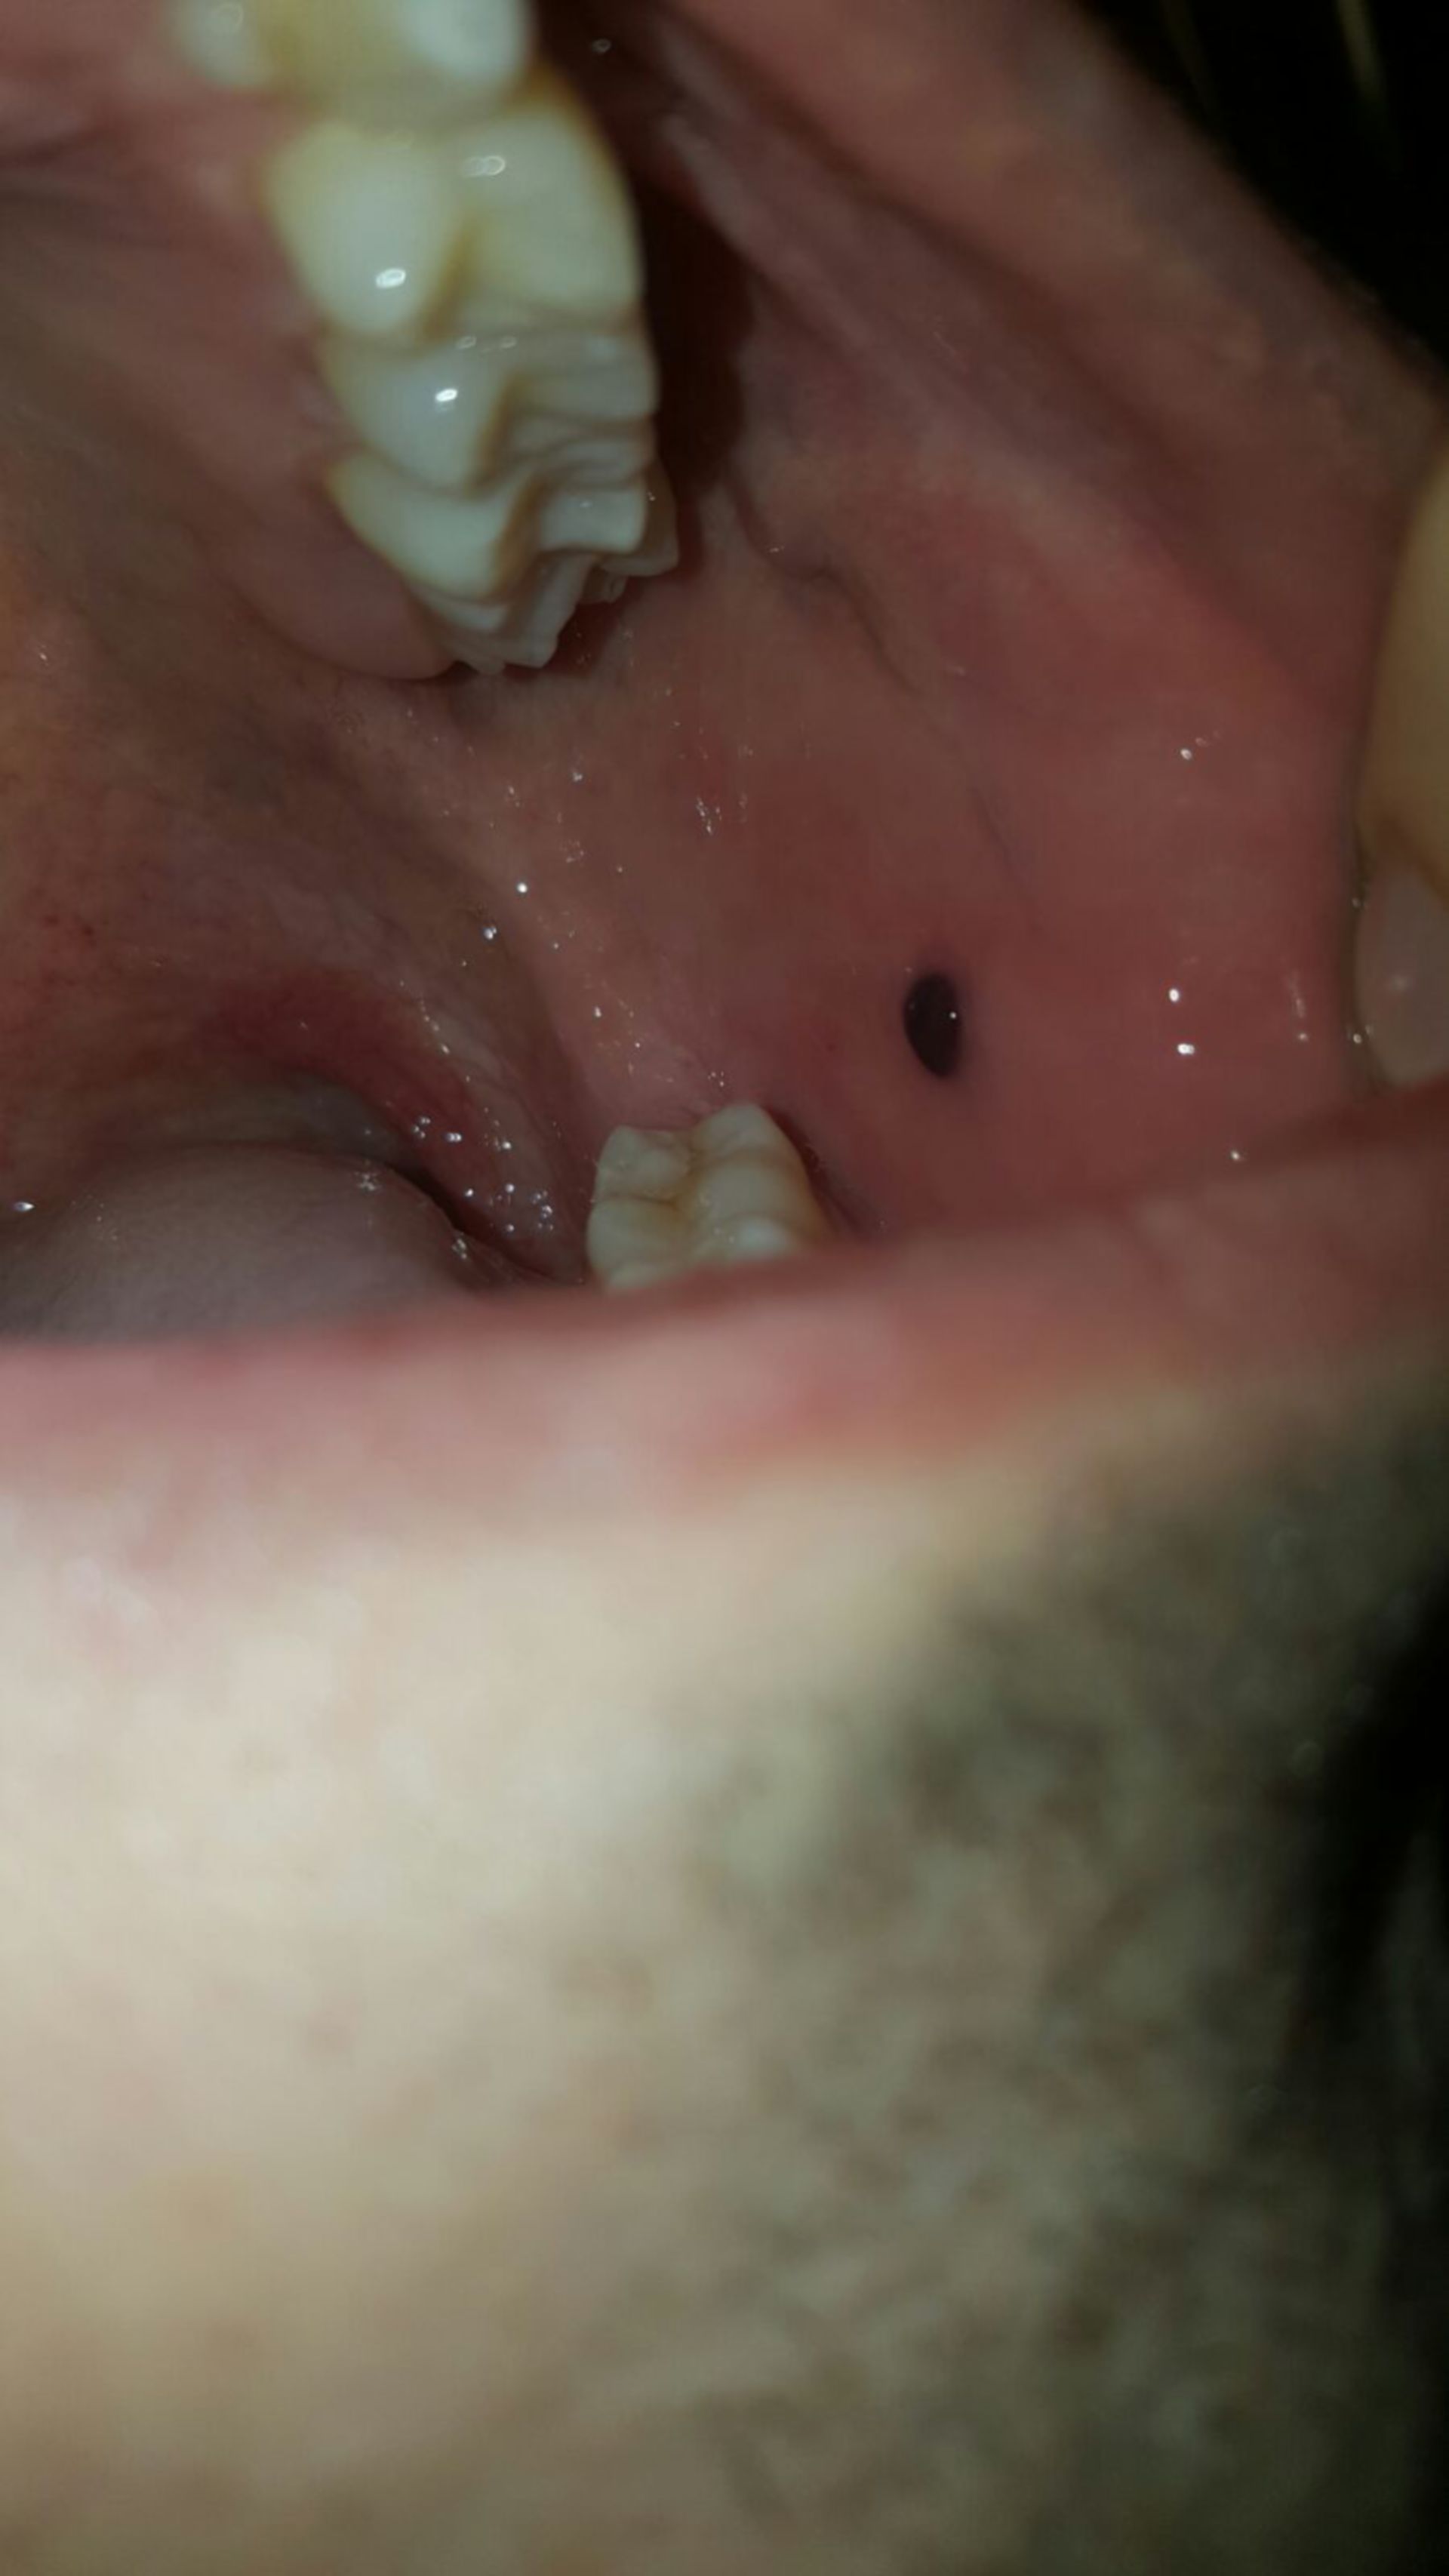 Aufnahme der Mundhöhle